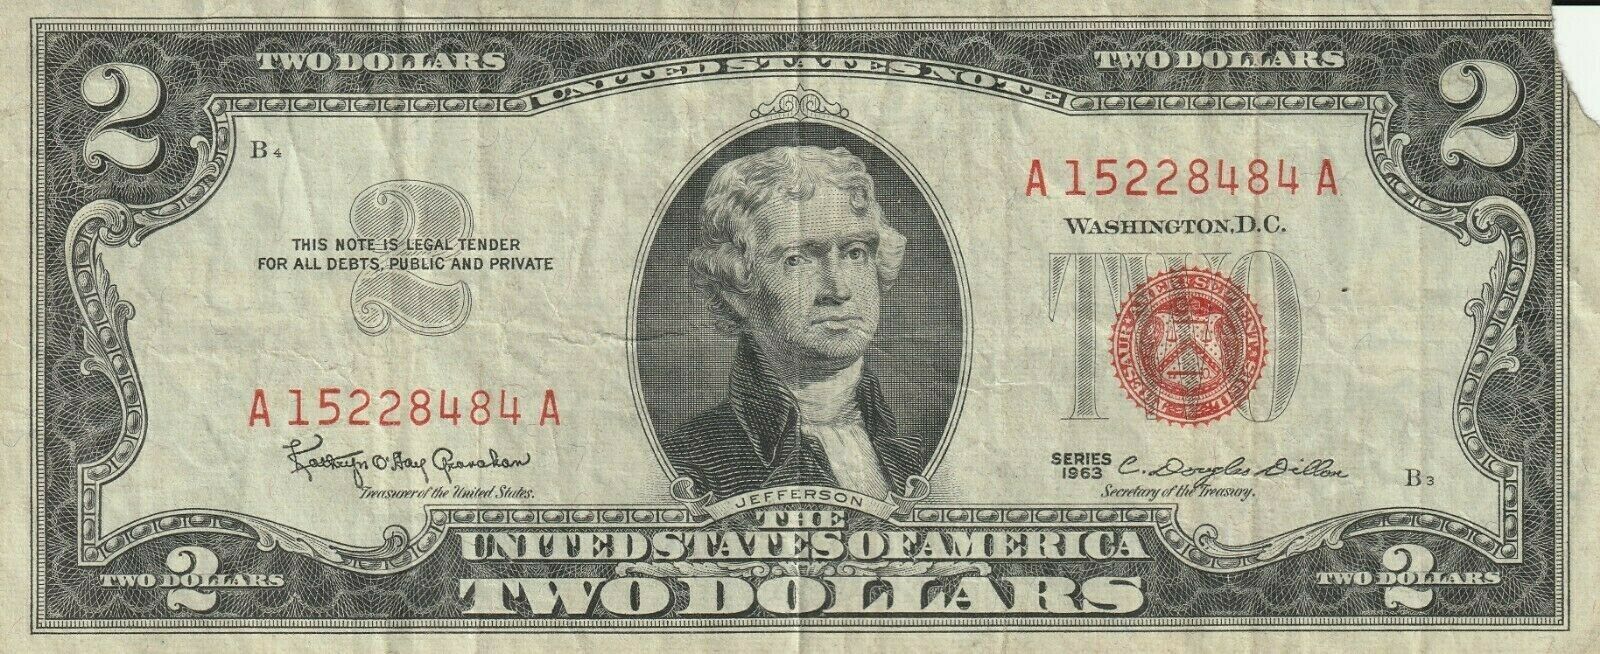 two Dollar bills (4 bills in this offering)